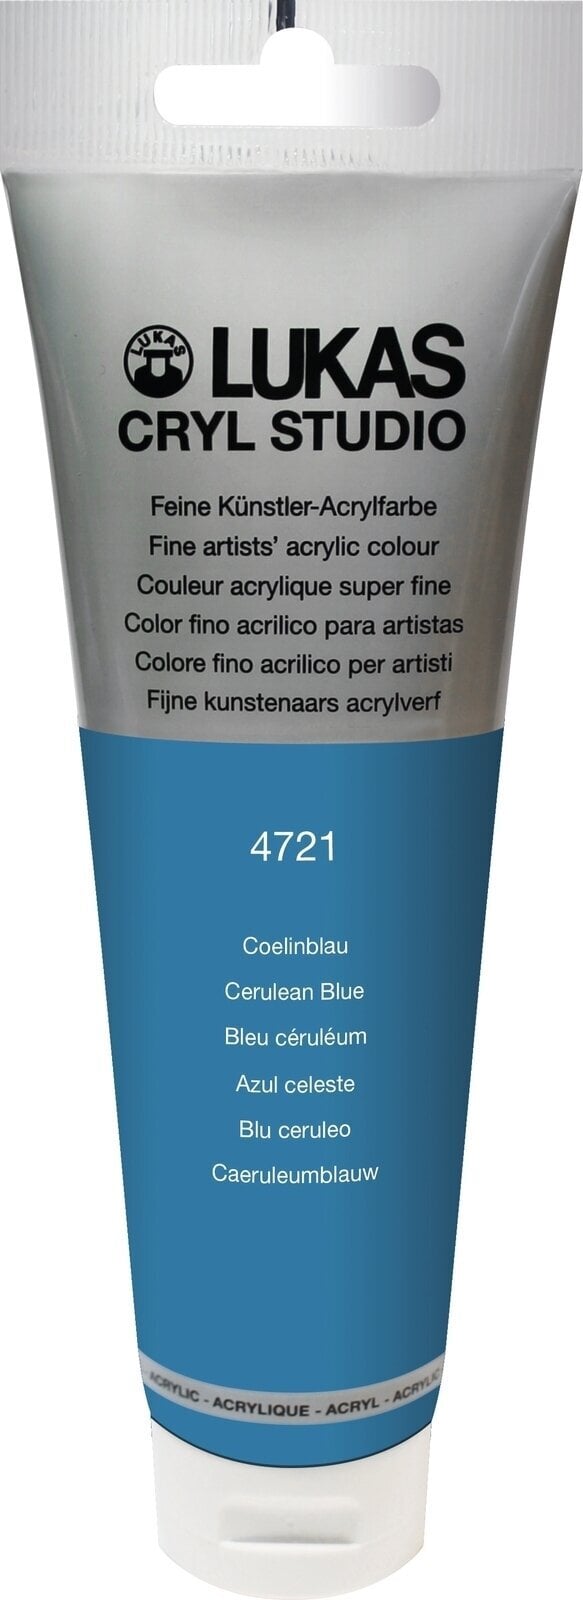 Farba akrylowa Lukas Cryl Studio Acrylic Paint Plastic Tube Farba akrylowa Cerulean Blue 125 ml 1 szt